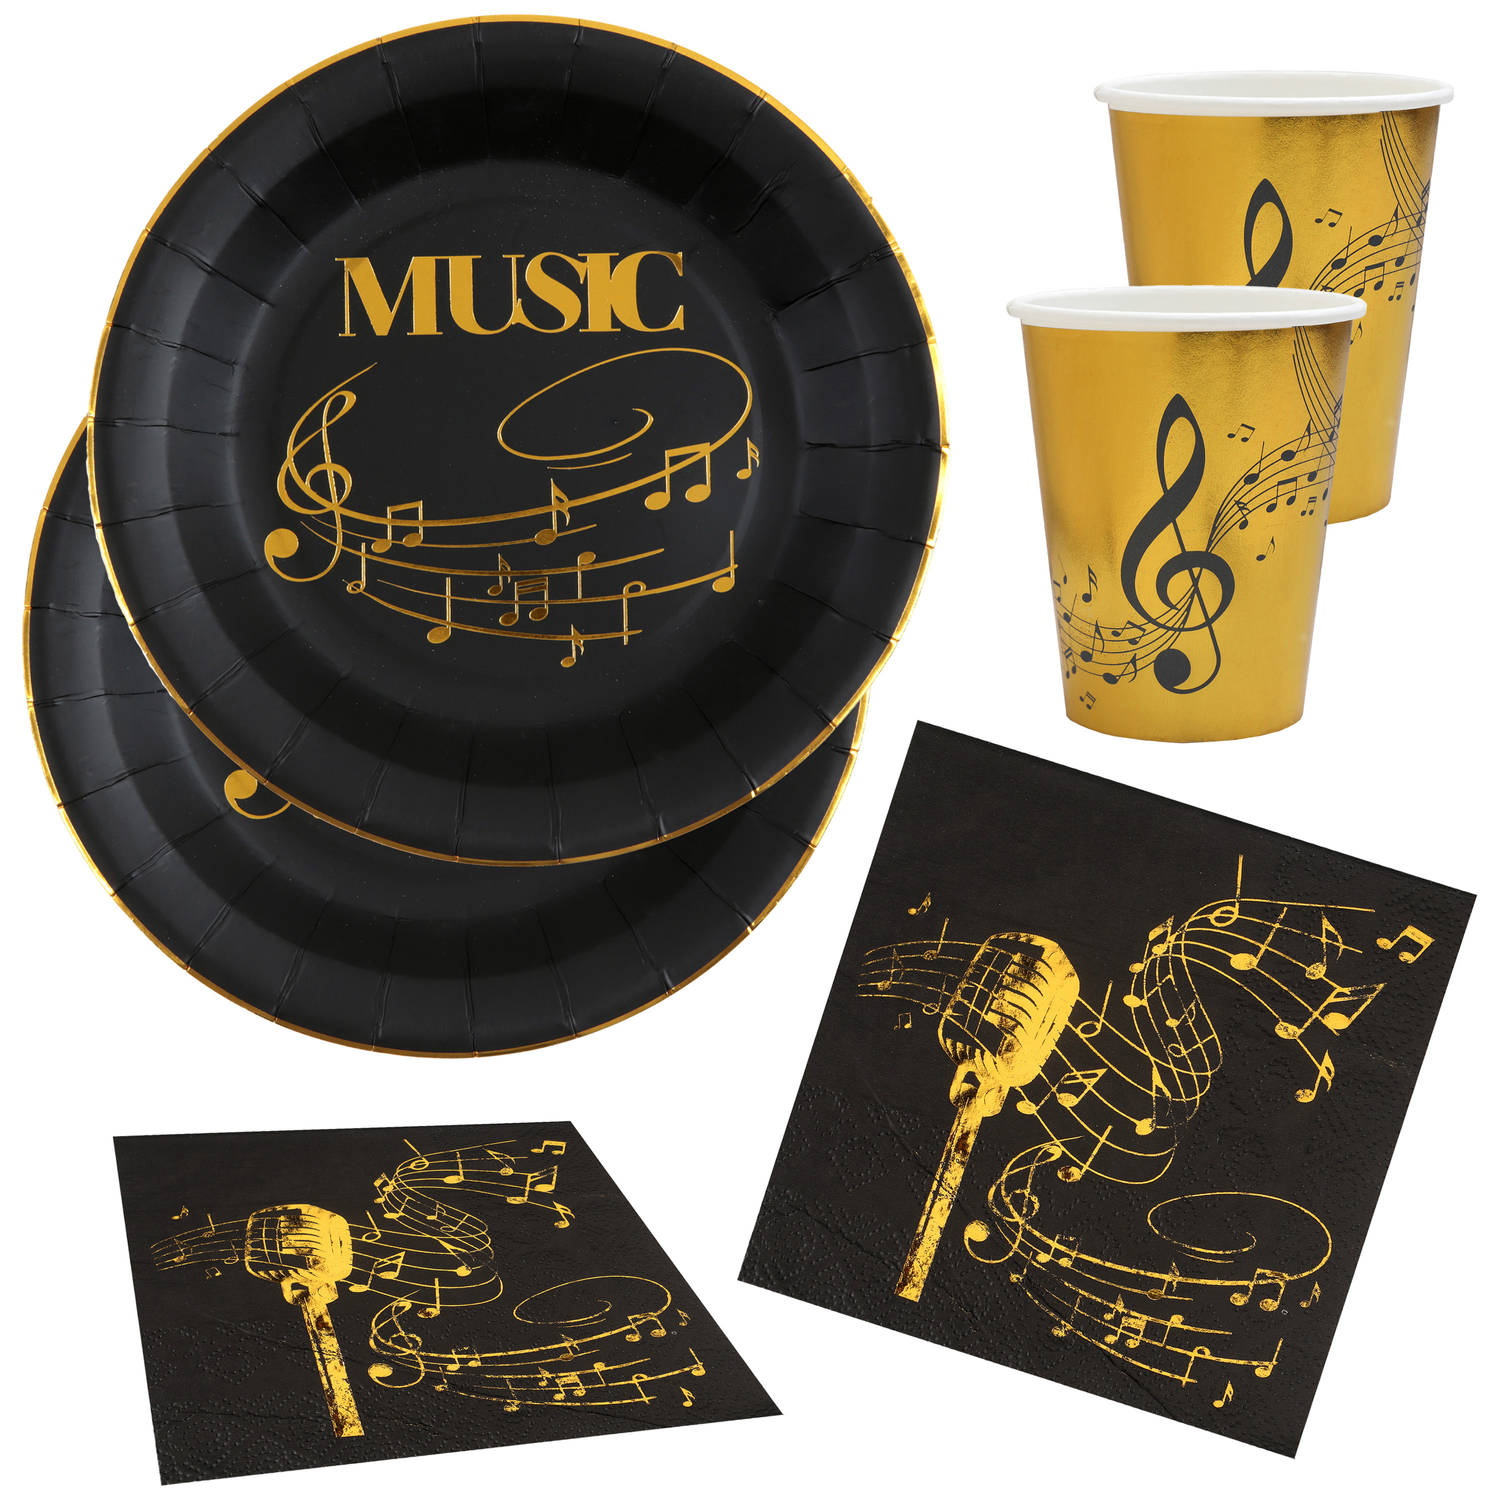 Muziek feest wegwerp servies set 10x bordjes-10x bekers-20x servetten goud-zwart Feestpakketten